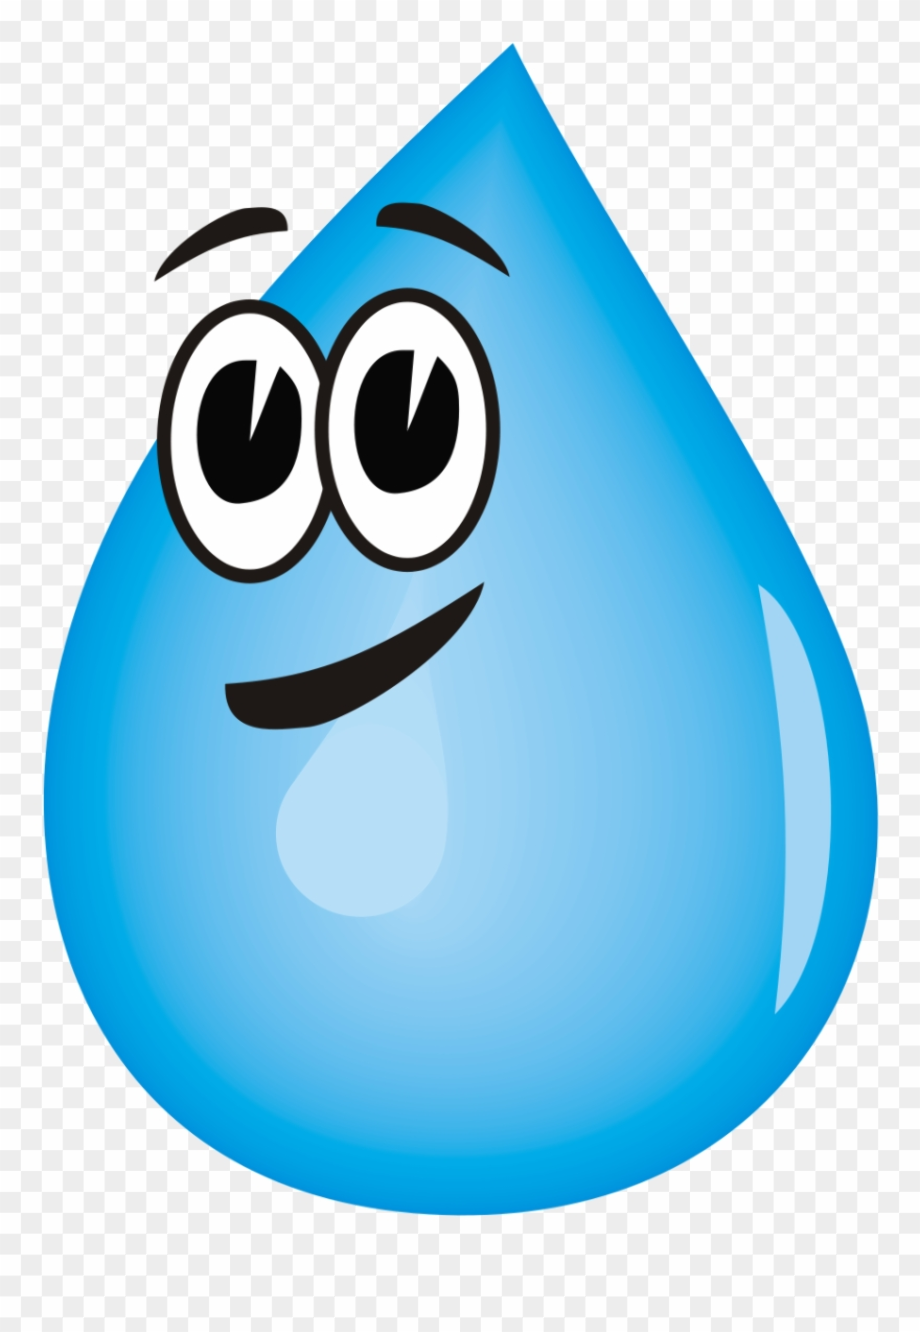 Download High Quality water logo cartoon Transparent PNG Images - Art